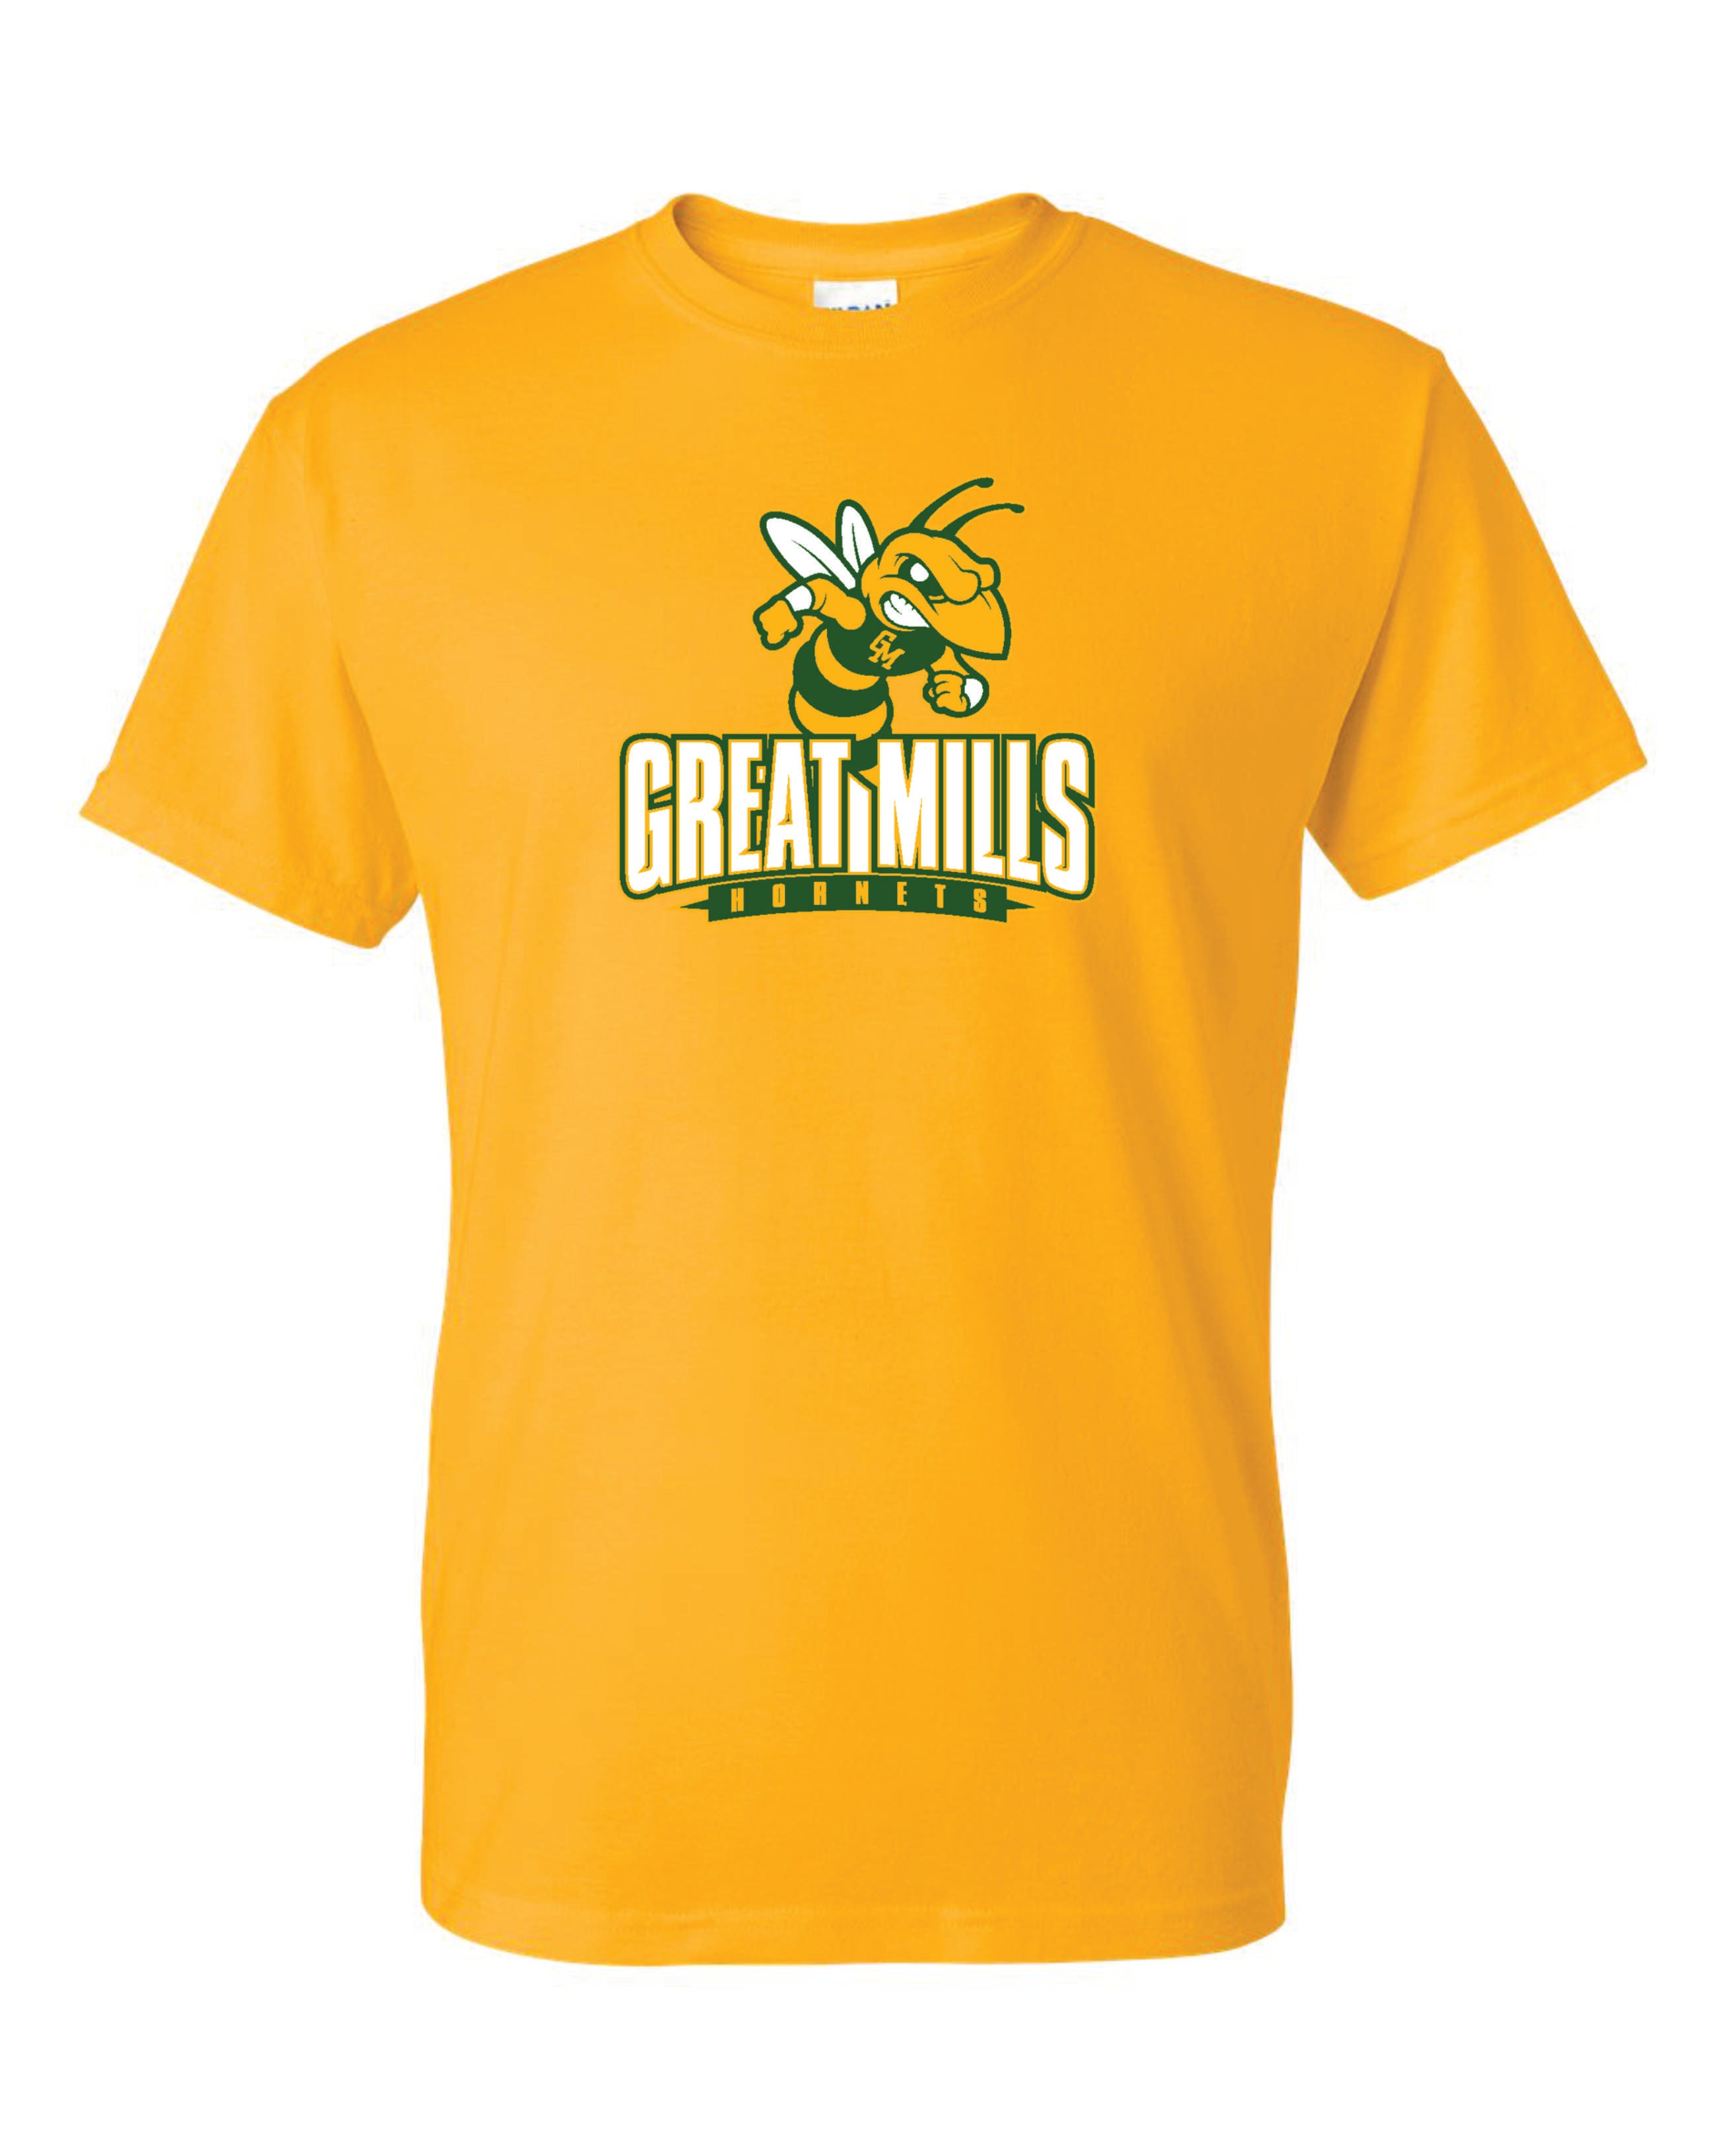 Great Mills Cross Country Short Sleeve T-Shirt 50/50 Blend